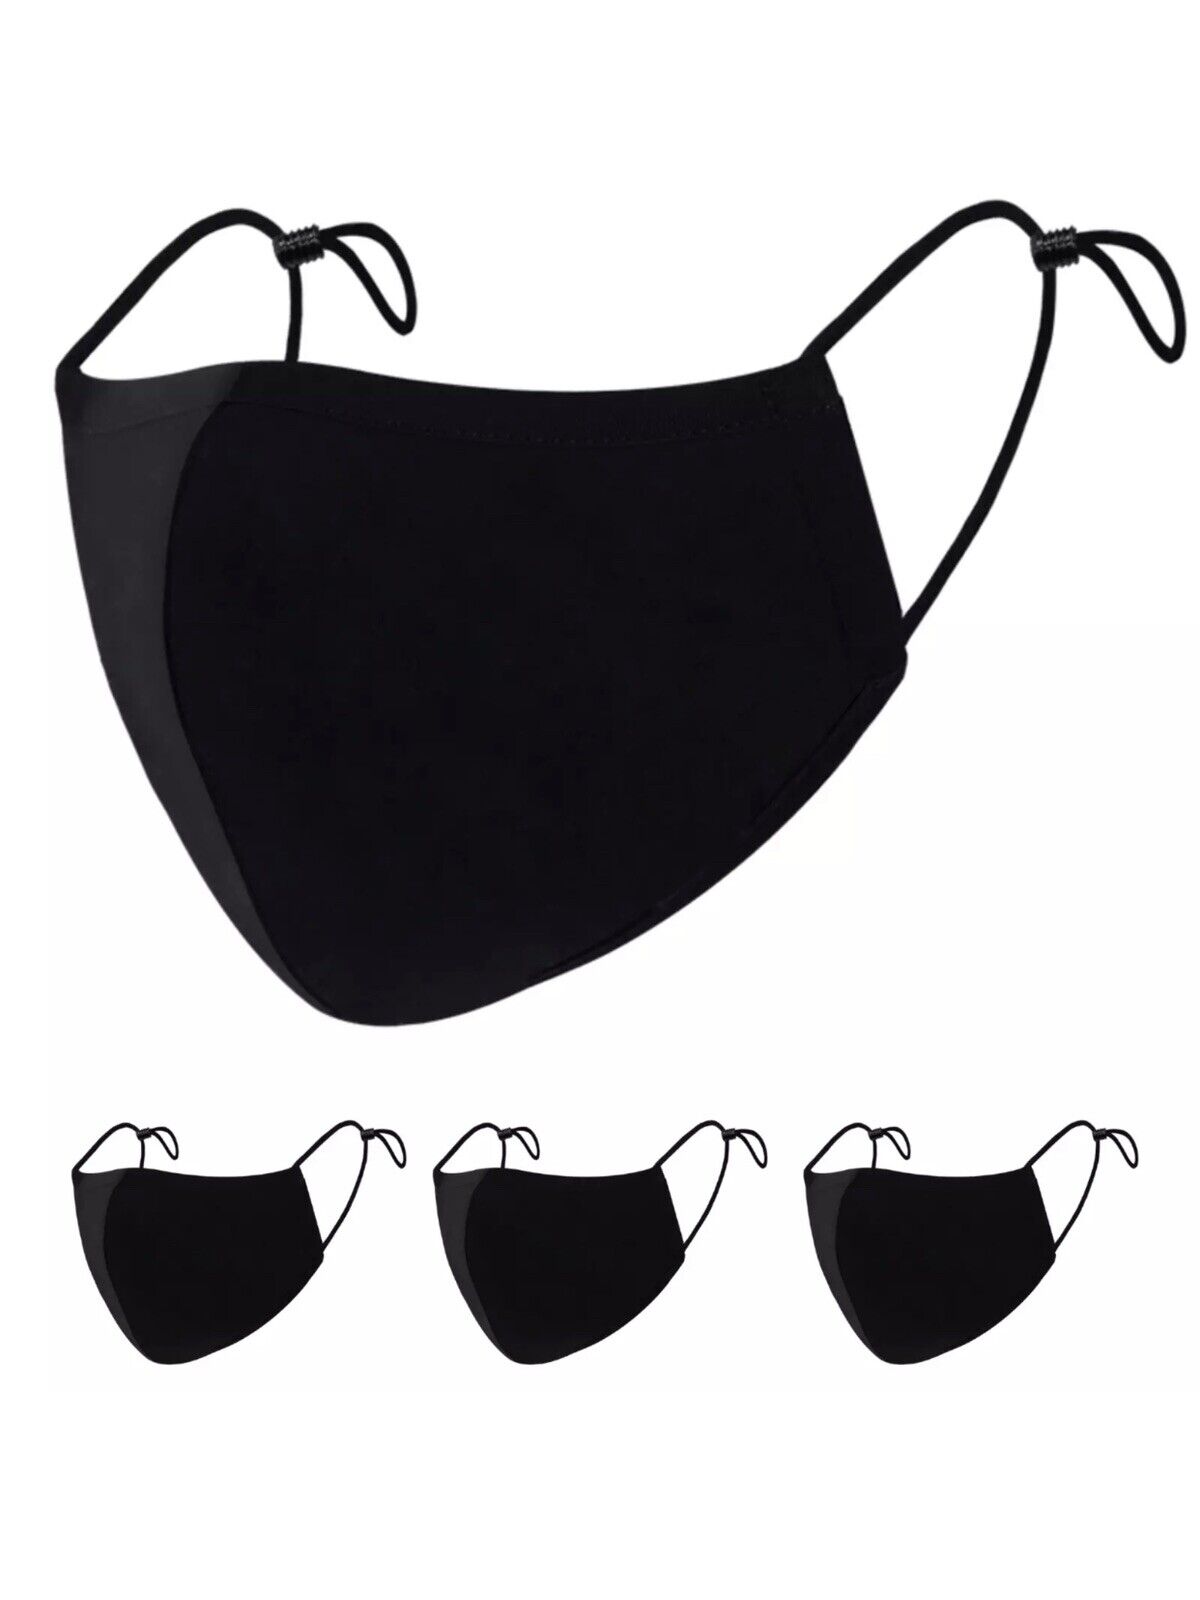 4 Face Masks Black Cotton Reusable Adult Mask Adjustable Elastic Loops Washable  ATKCITYSHOP - фотография #3